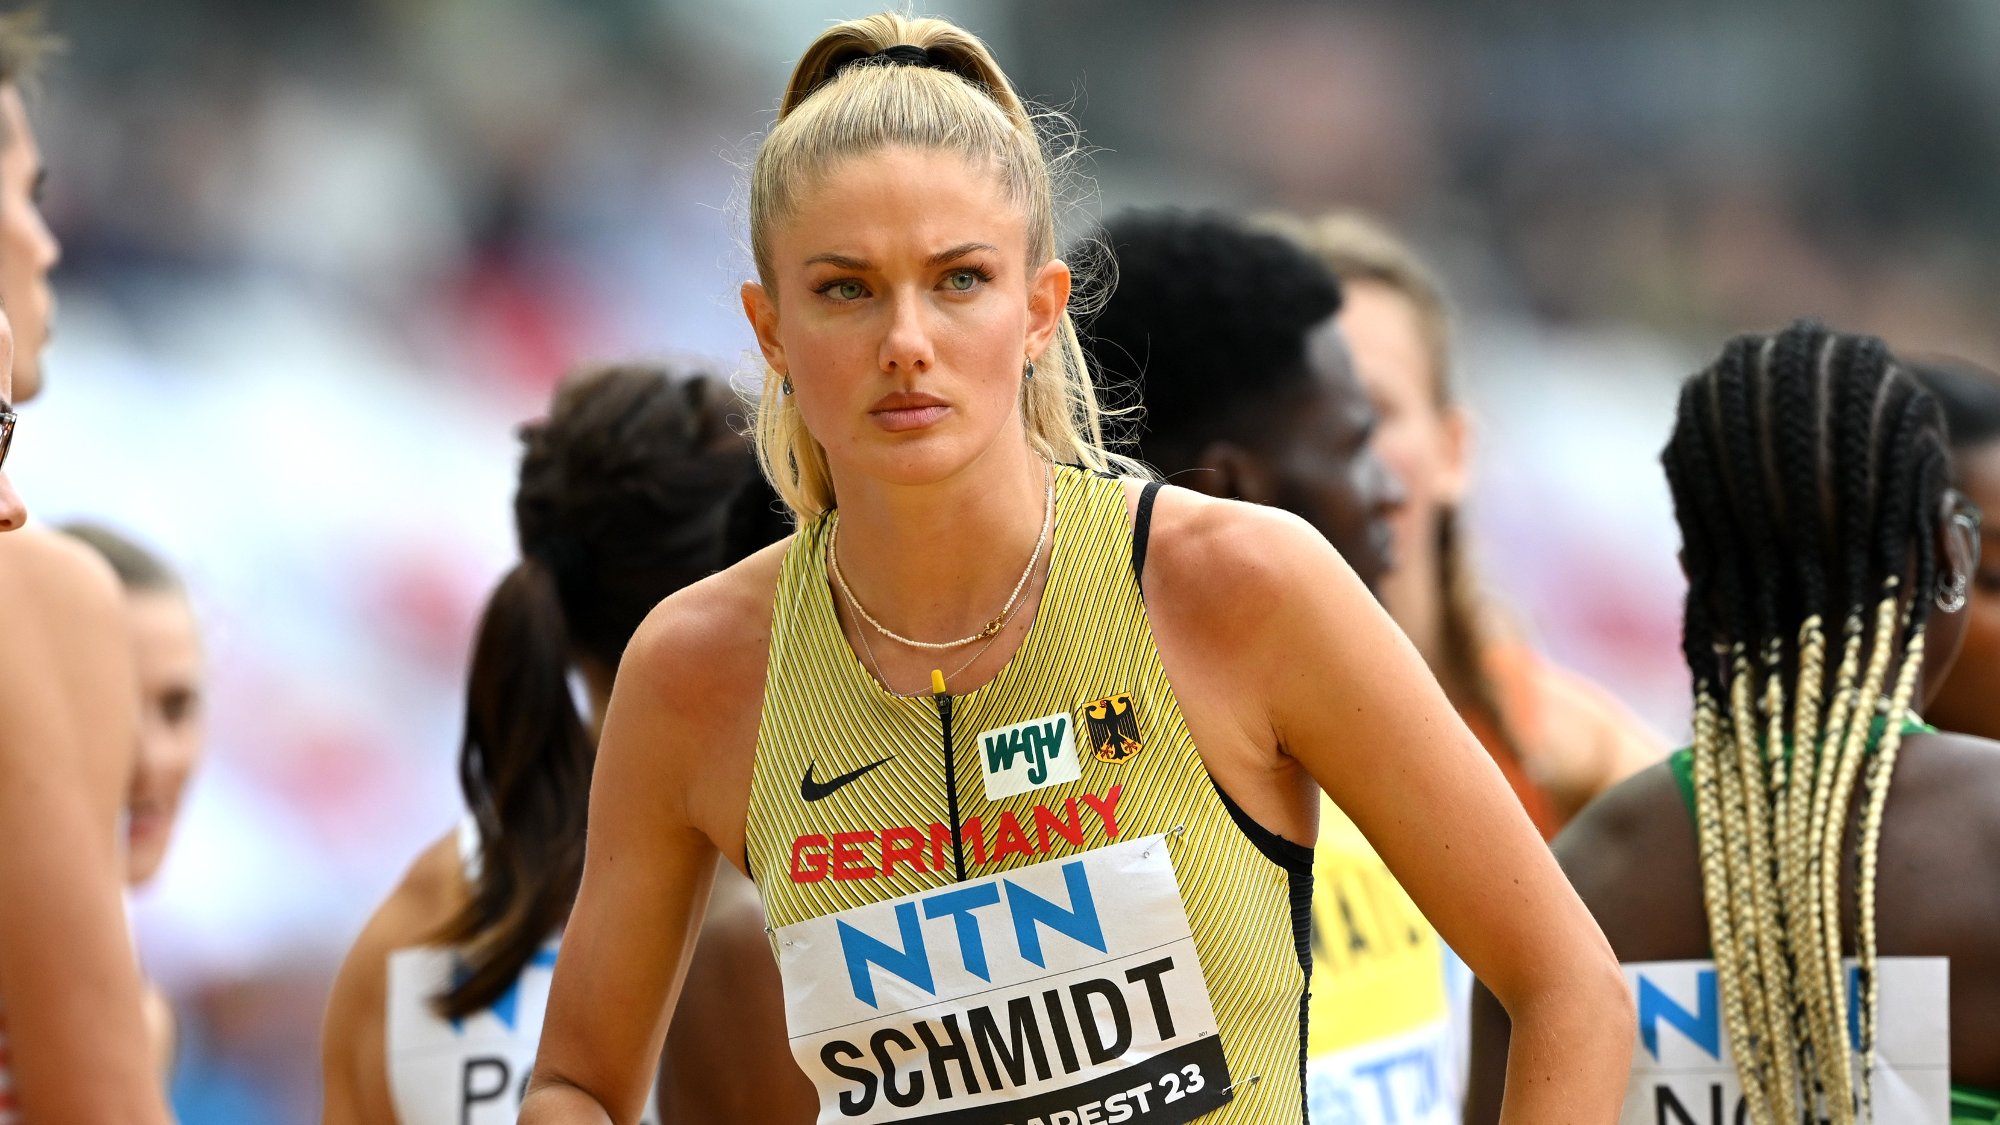 Alica Schmidt, la atleta influencer